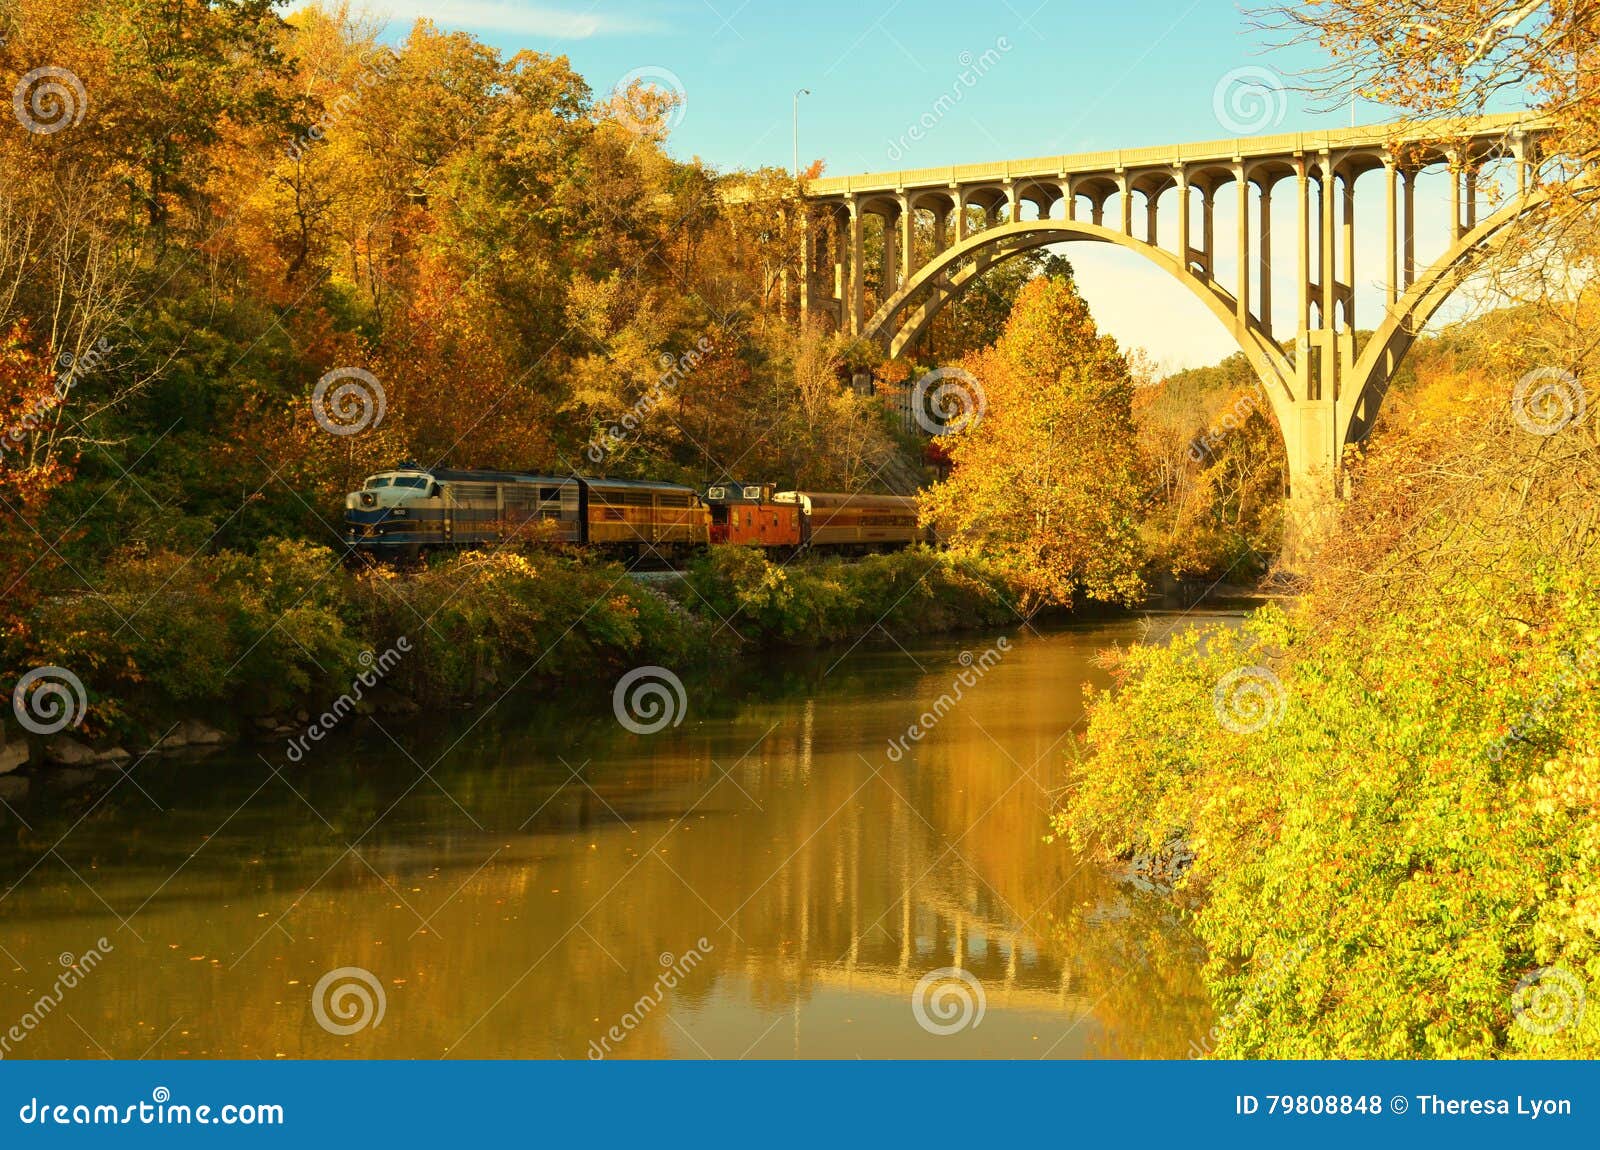 cuyahoga valley scenic railroad train under bridge overpass